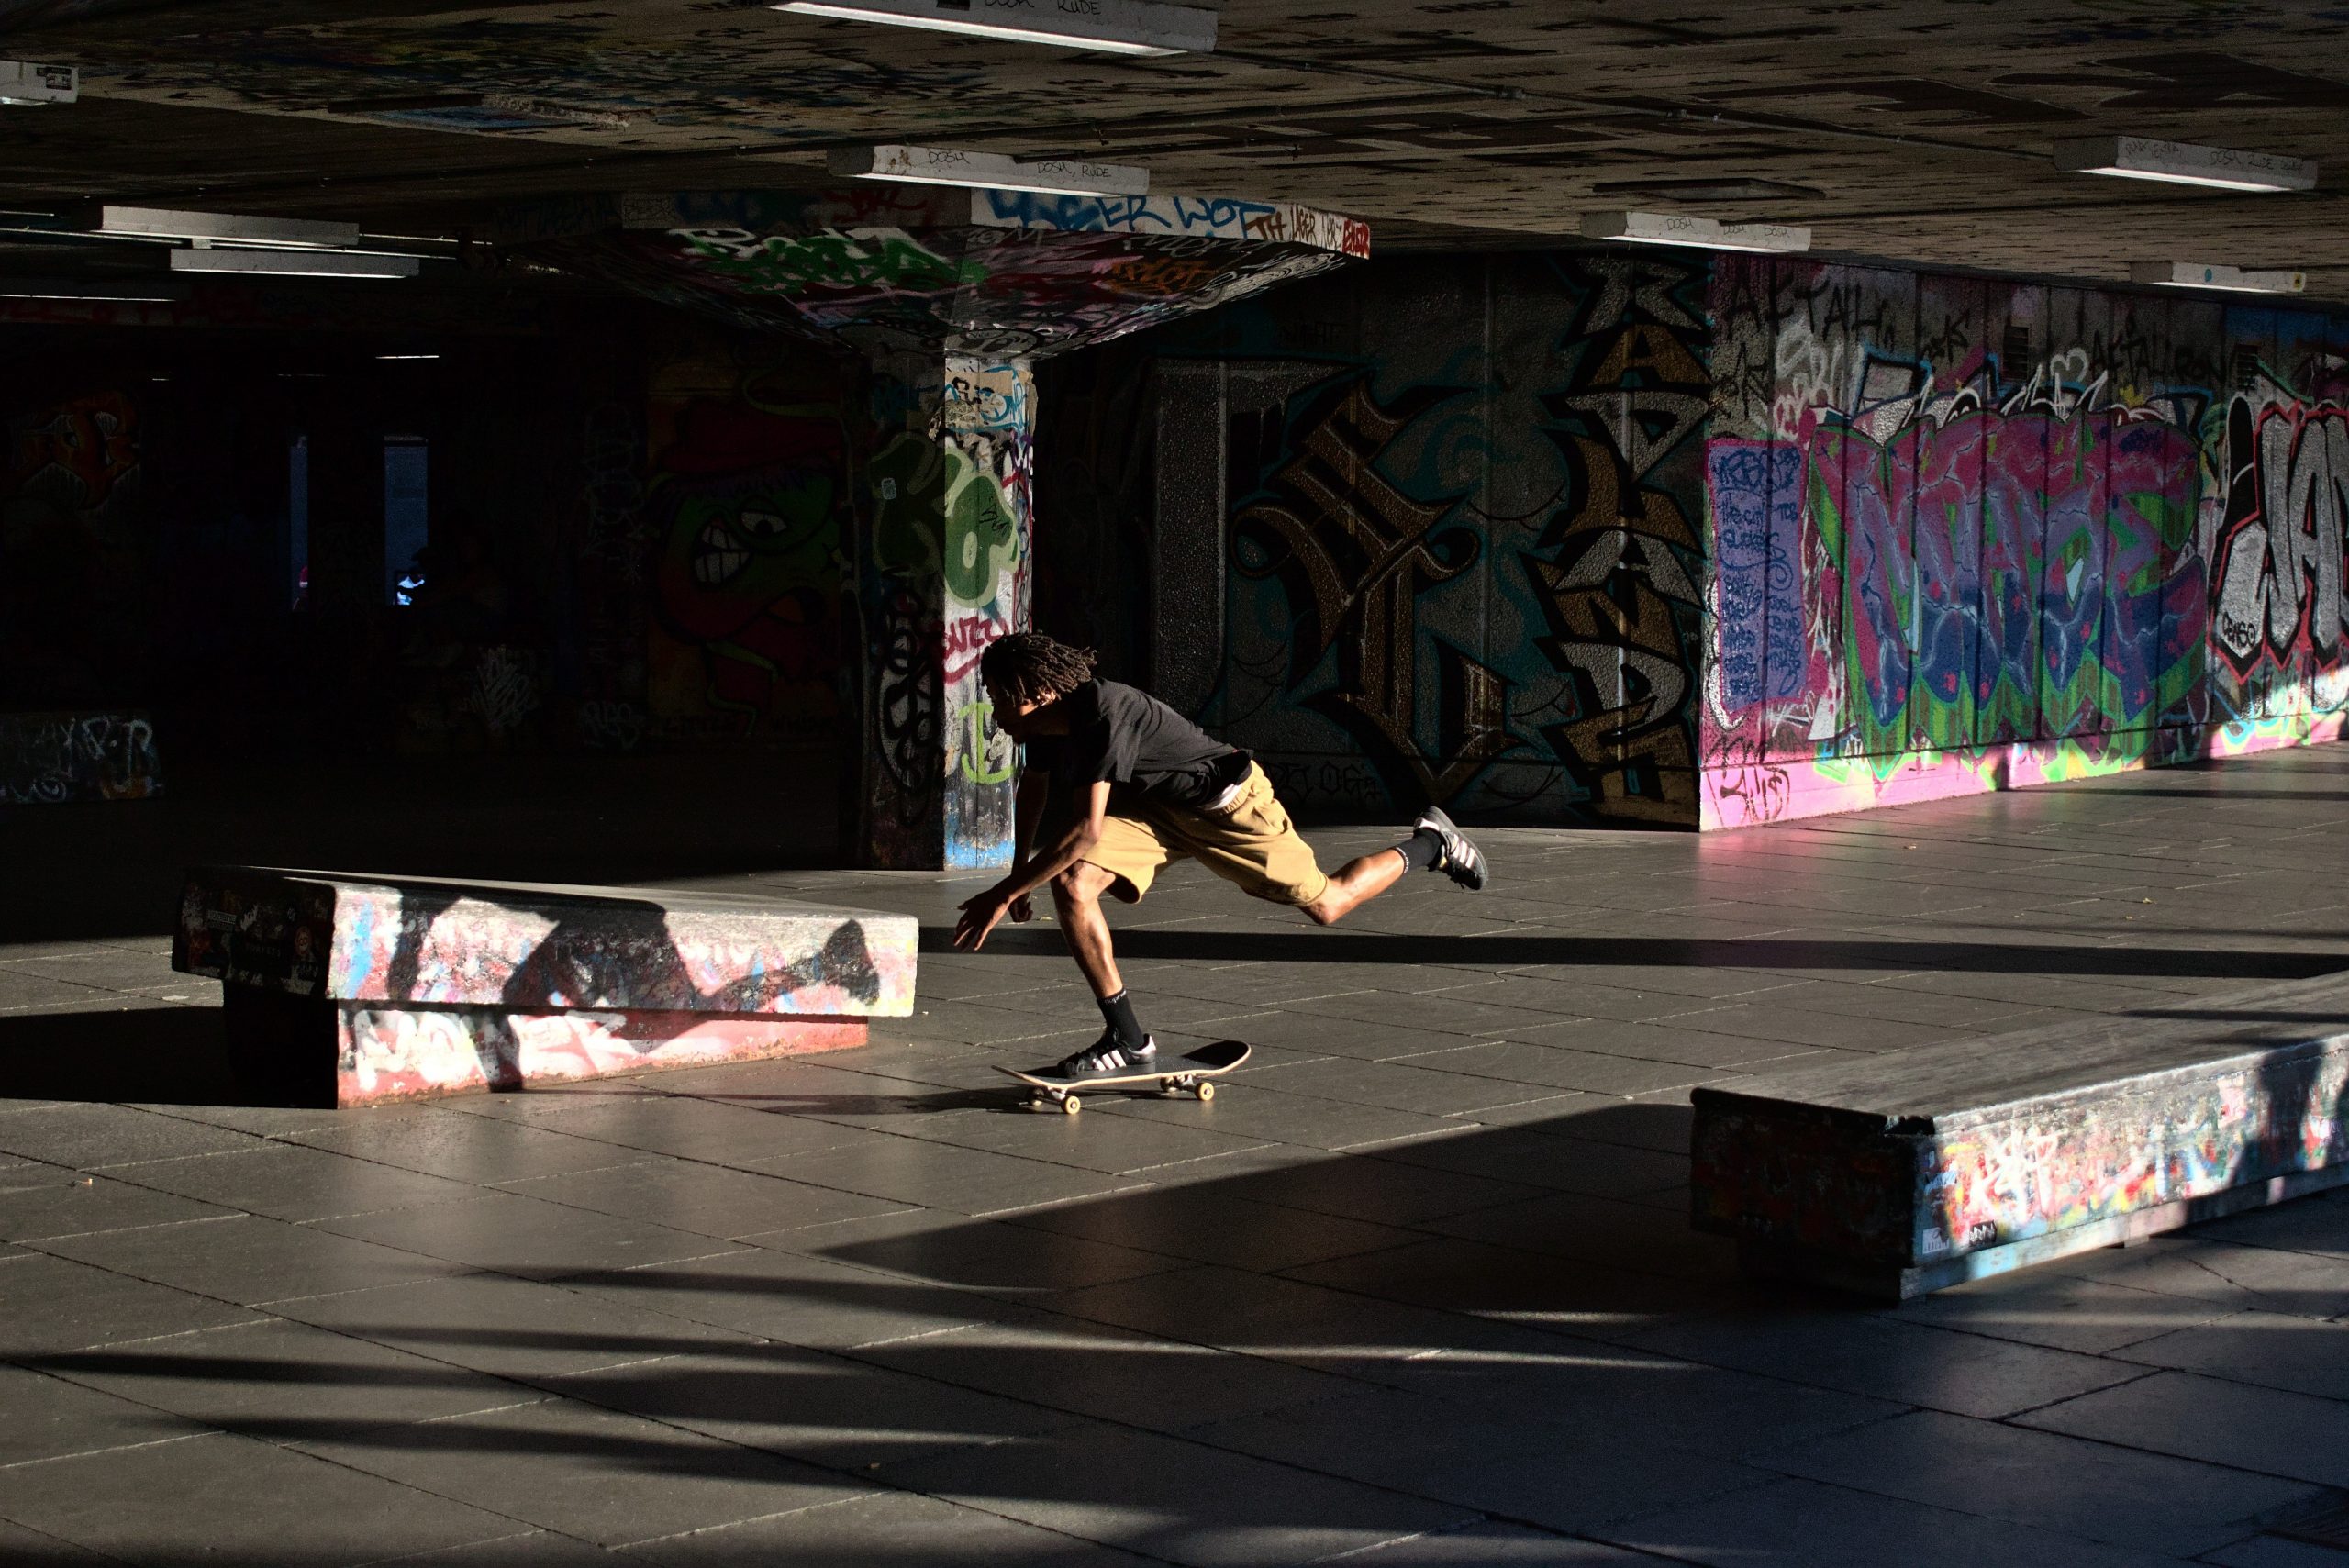 Image of a man in black shirt skateboarding in a skate park. Source: stefano bucciarelli, unsplash